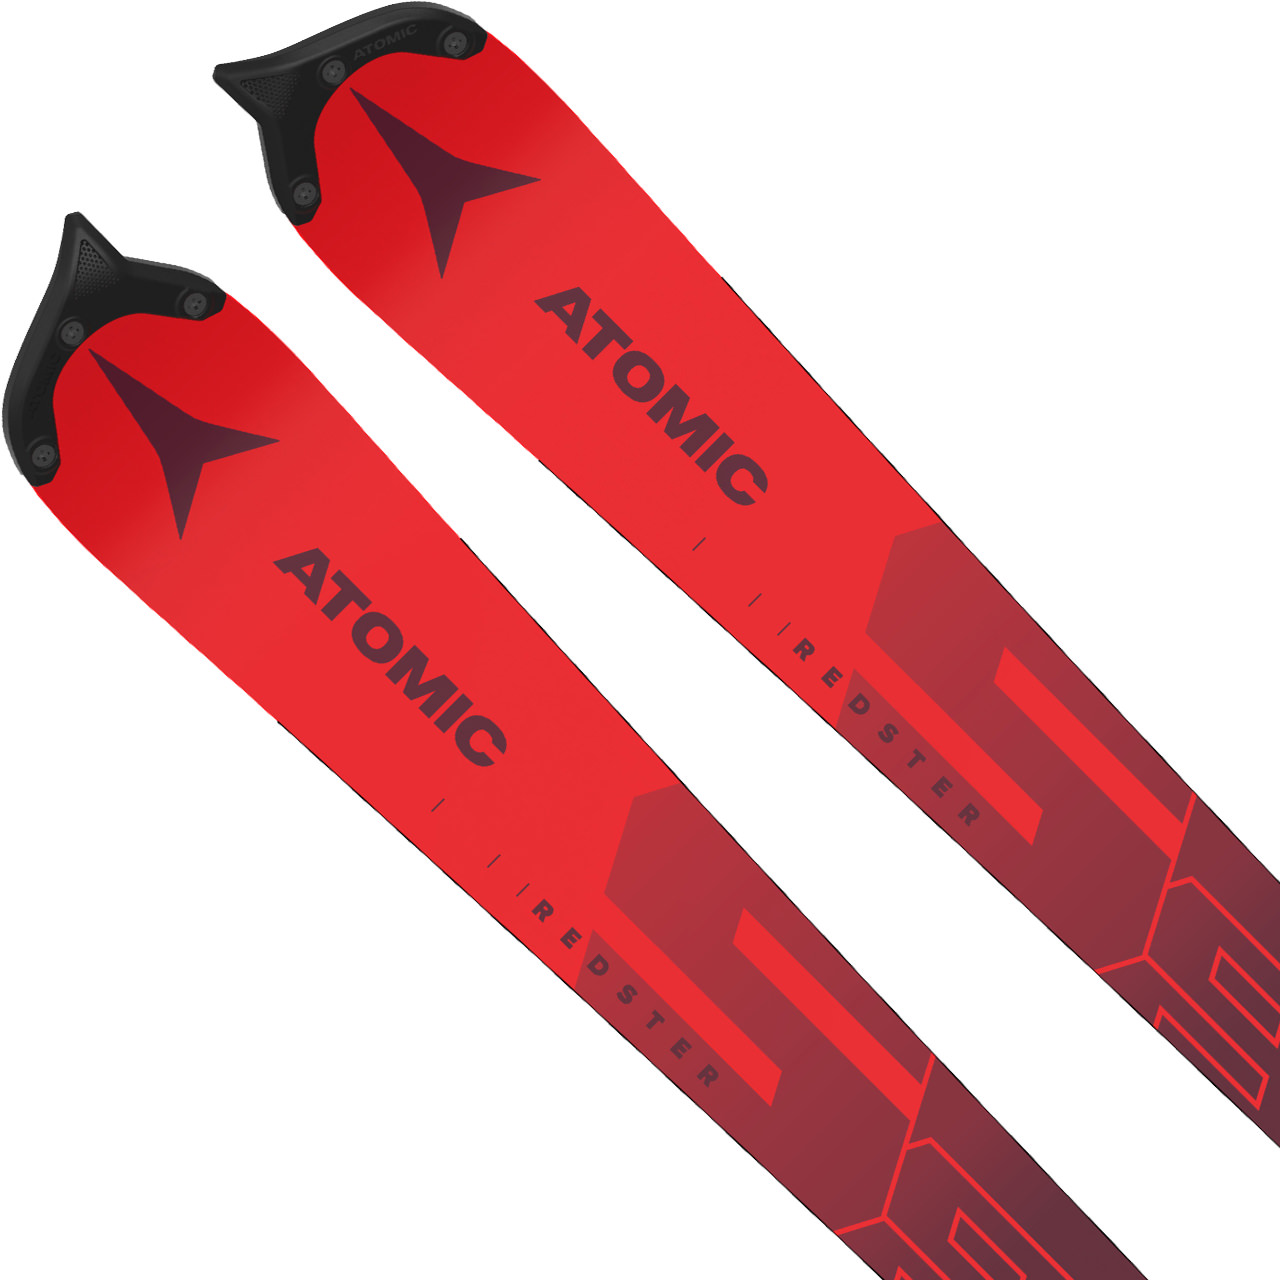 ATOMIC redstar FIS APC LIFTED 23-23.5cm - スキー